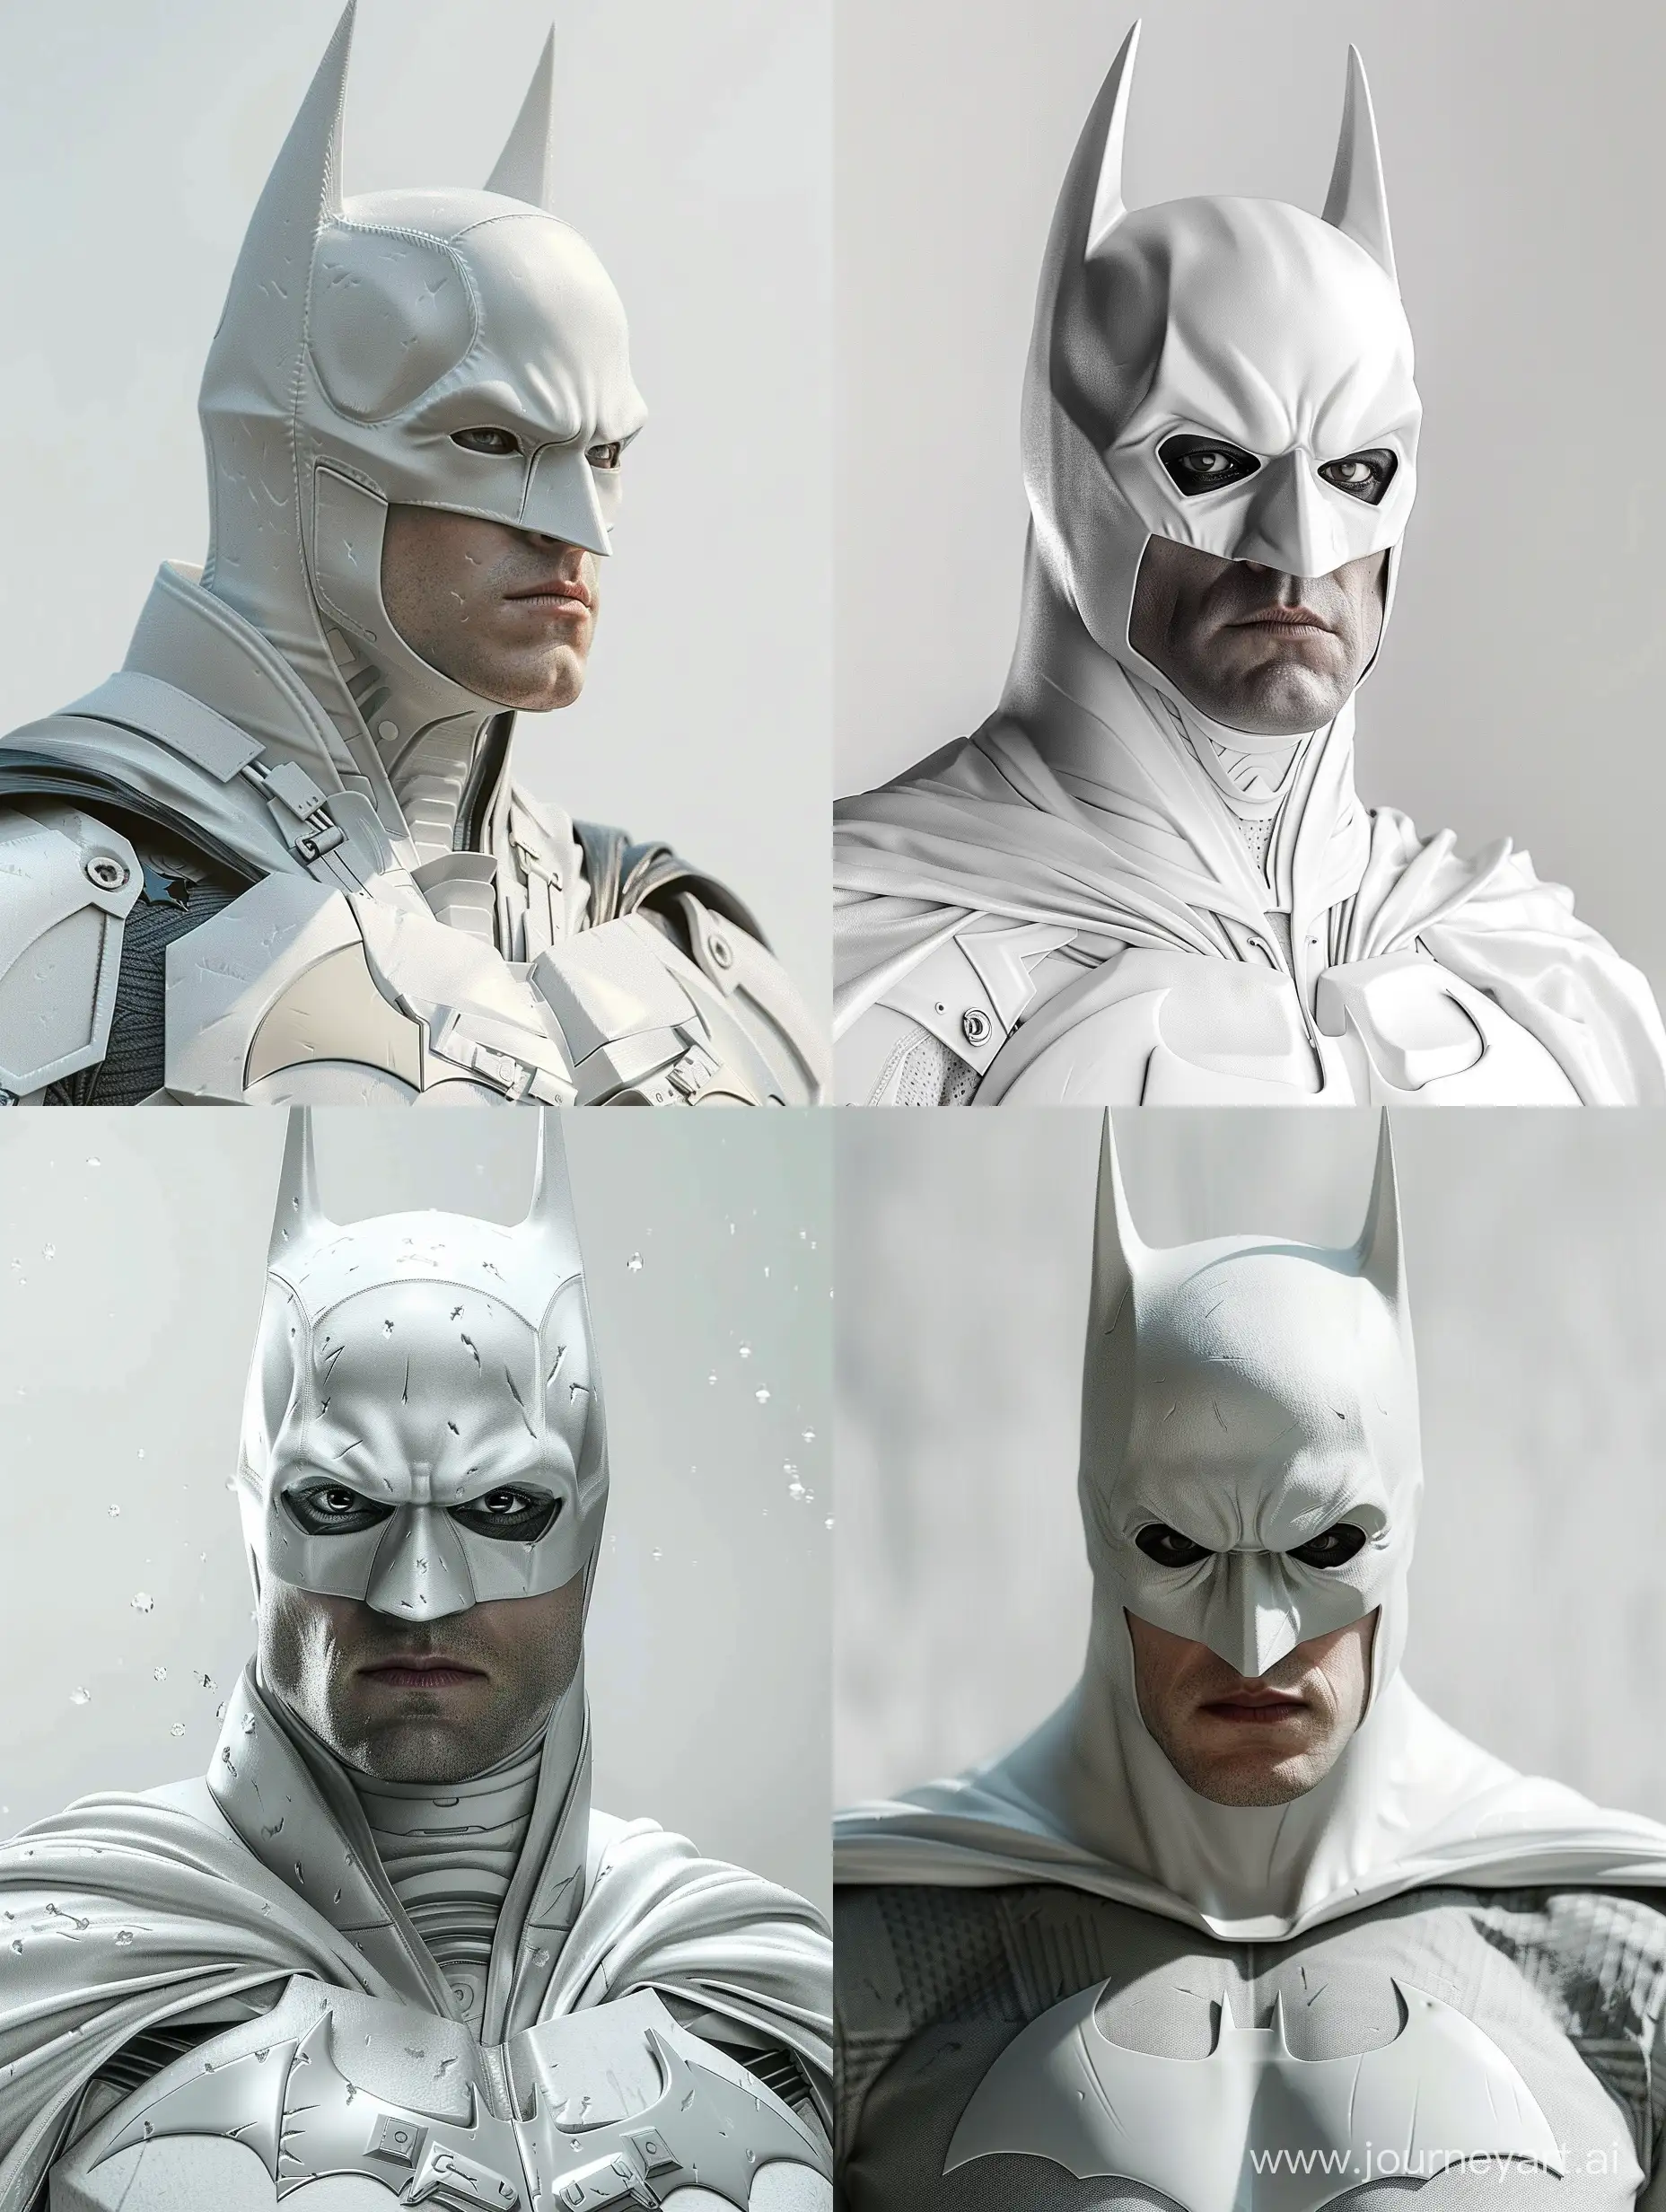 Christian Bale as Batman in white ultra-realistic 